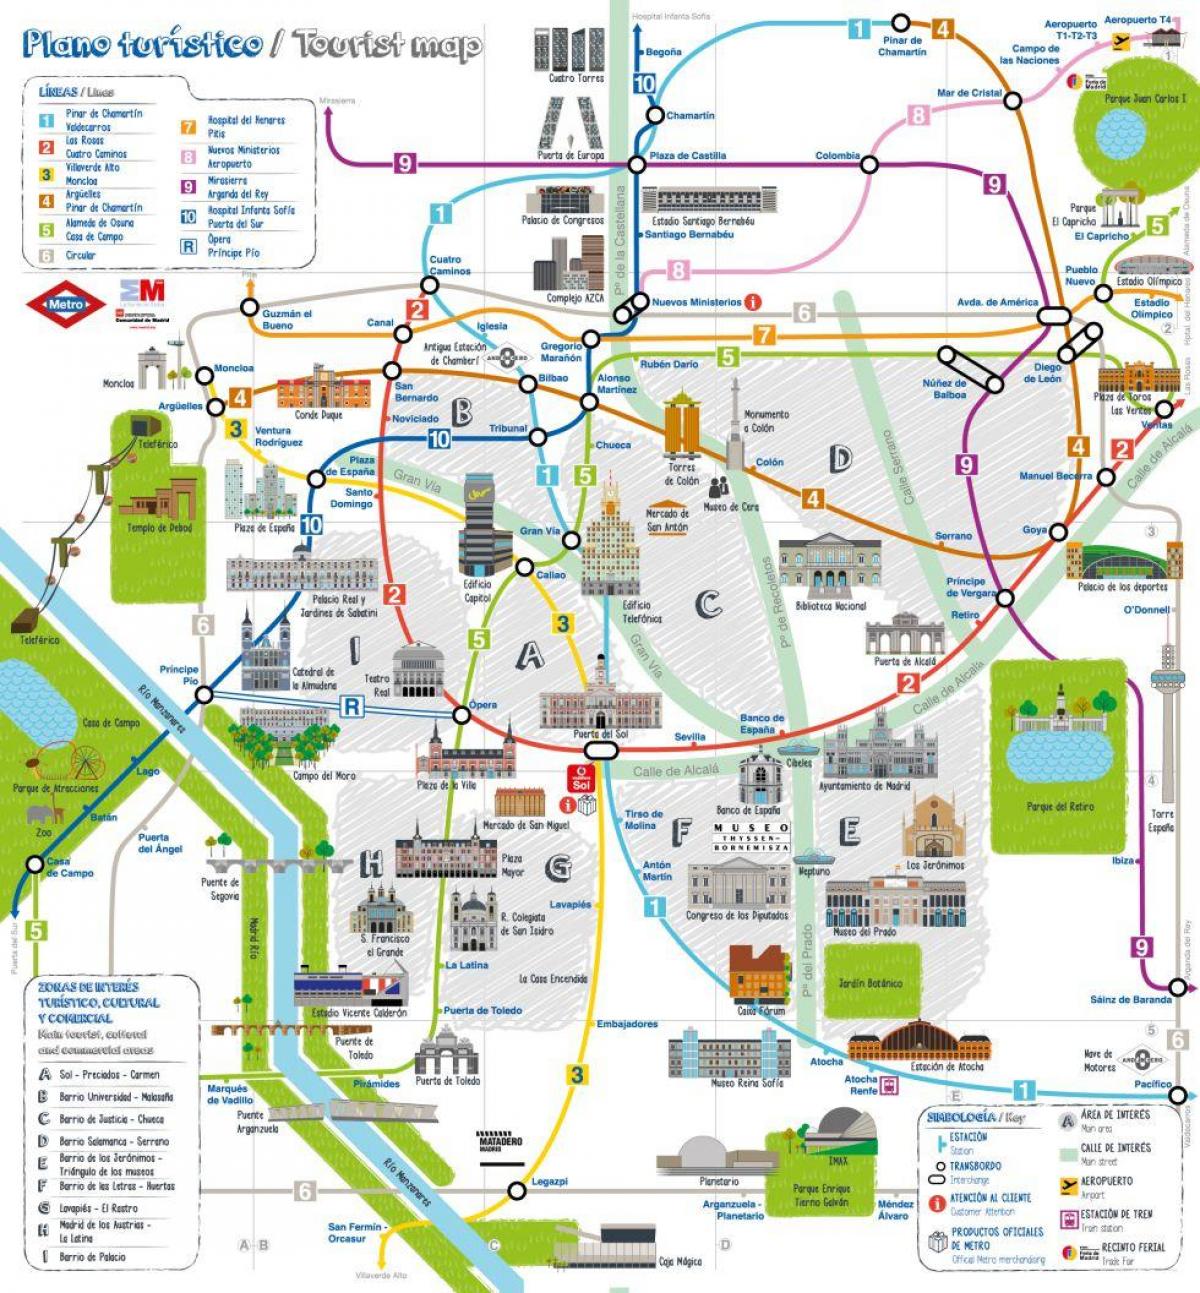 मैड्रिड शहर के नक्शे पर्यटक